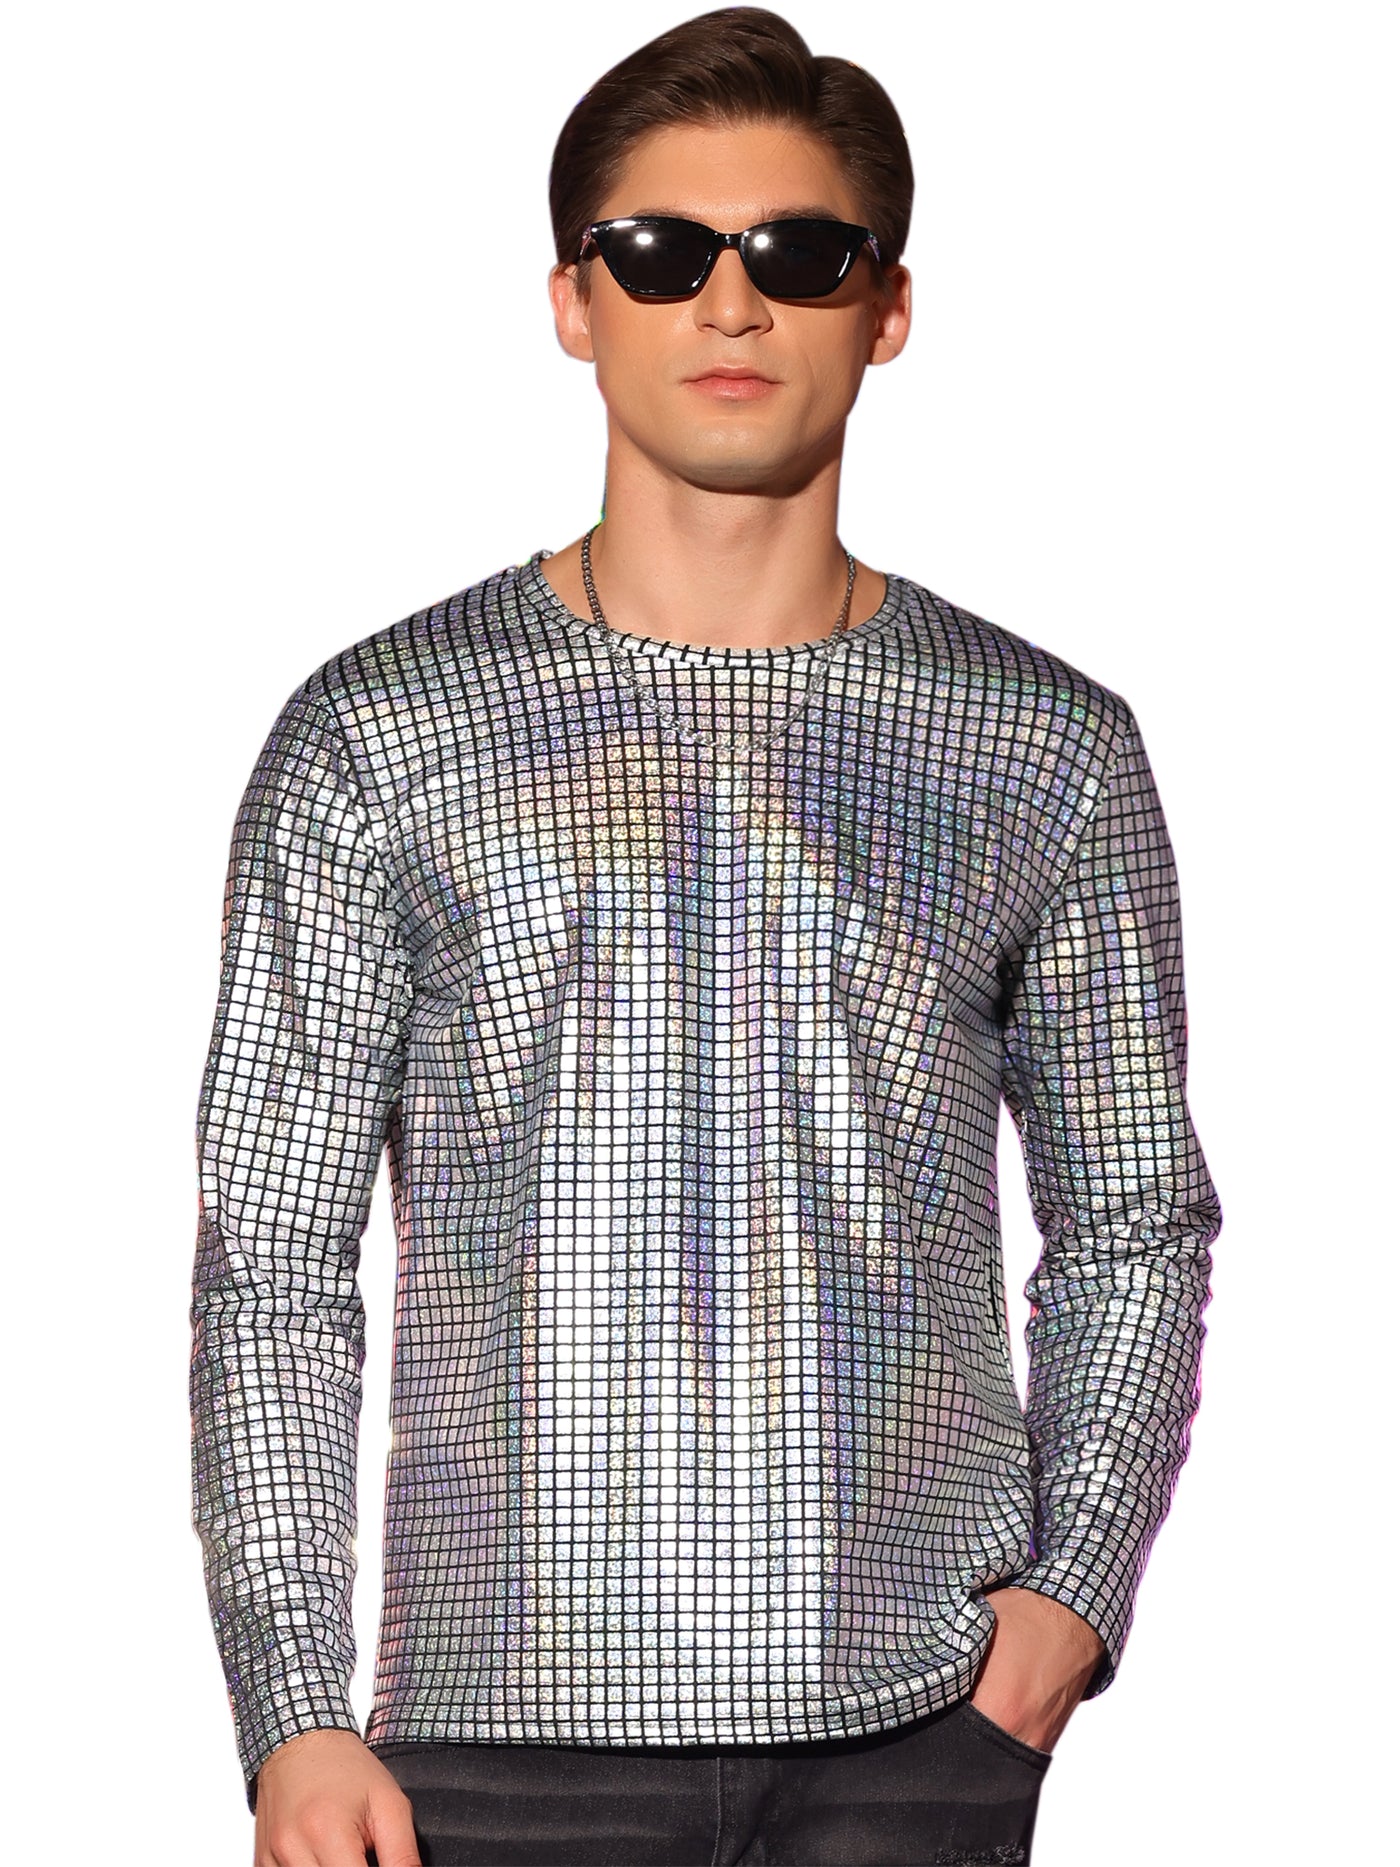 Bublédon Metallic T-Shirt for Men's Crew Neck Long Sleeves Party Club Shiny Top